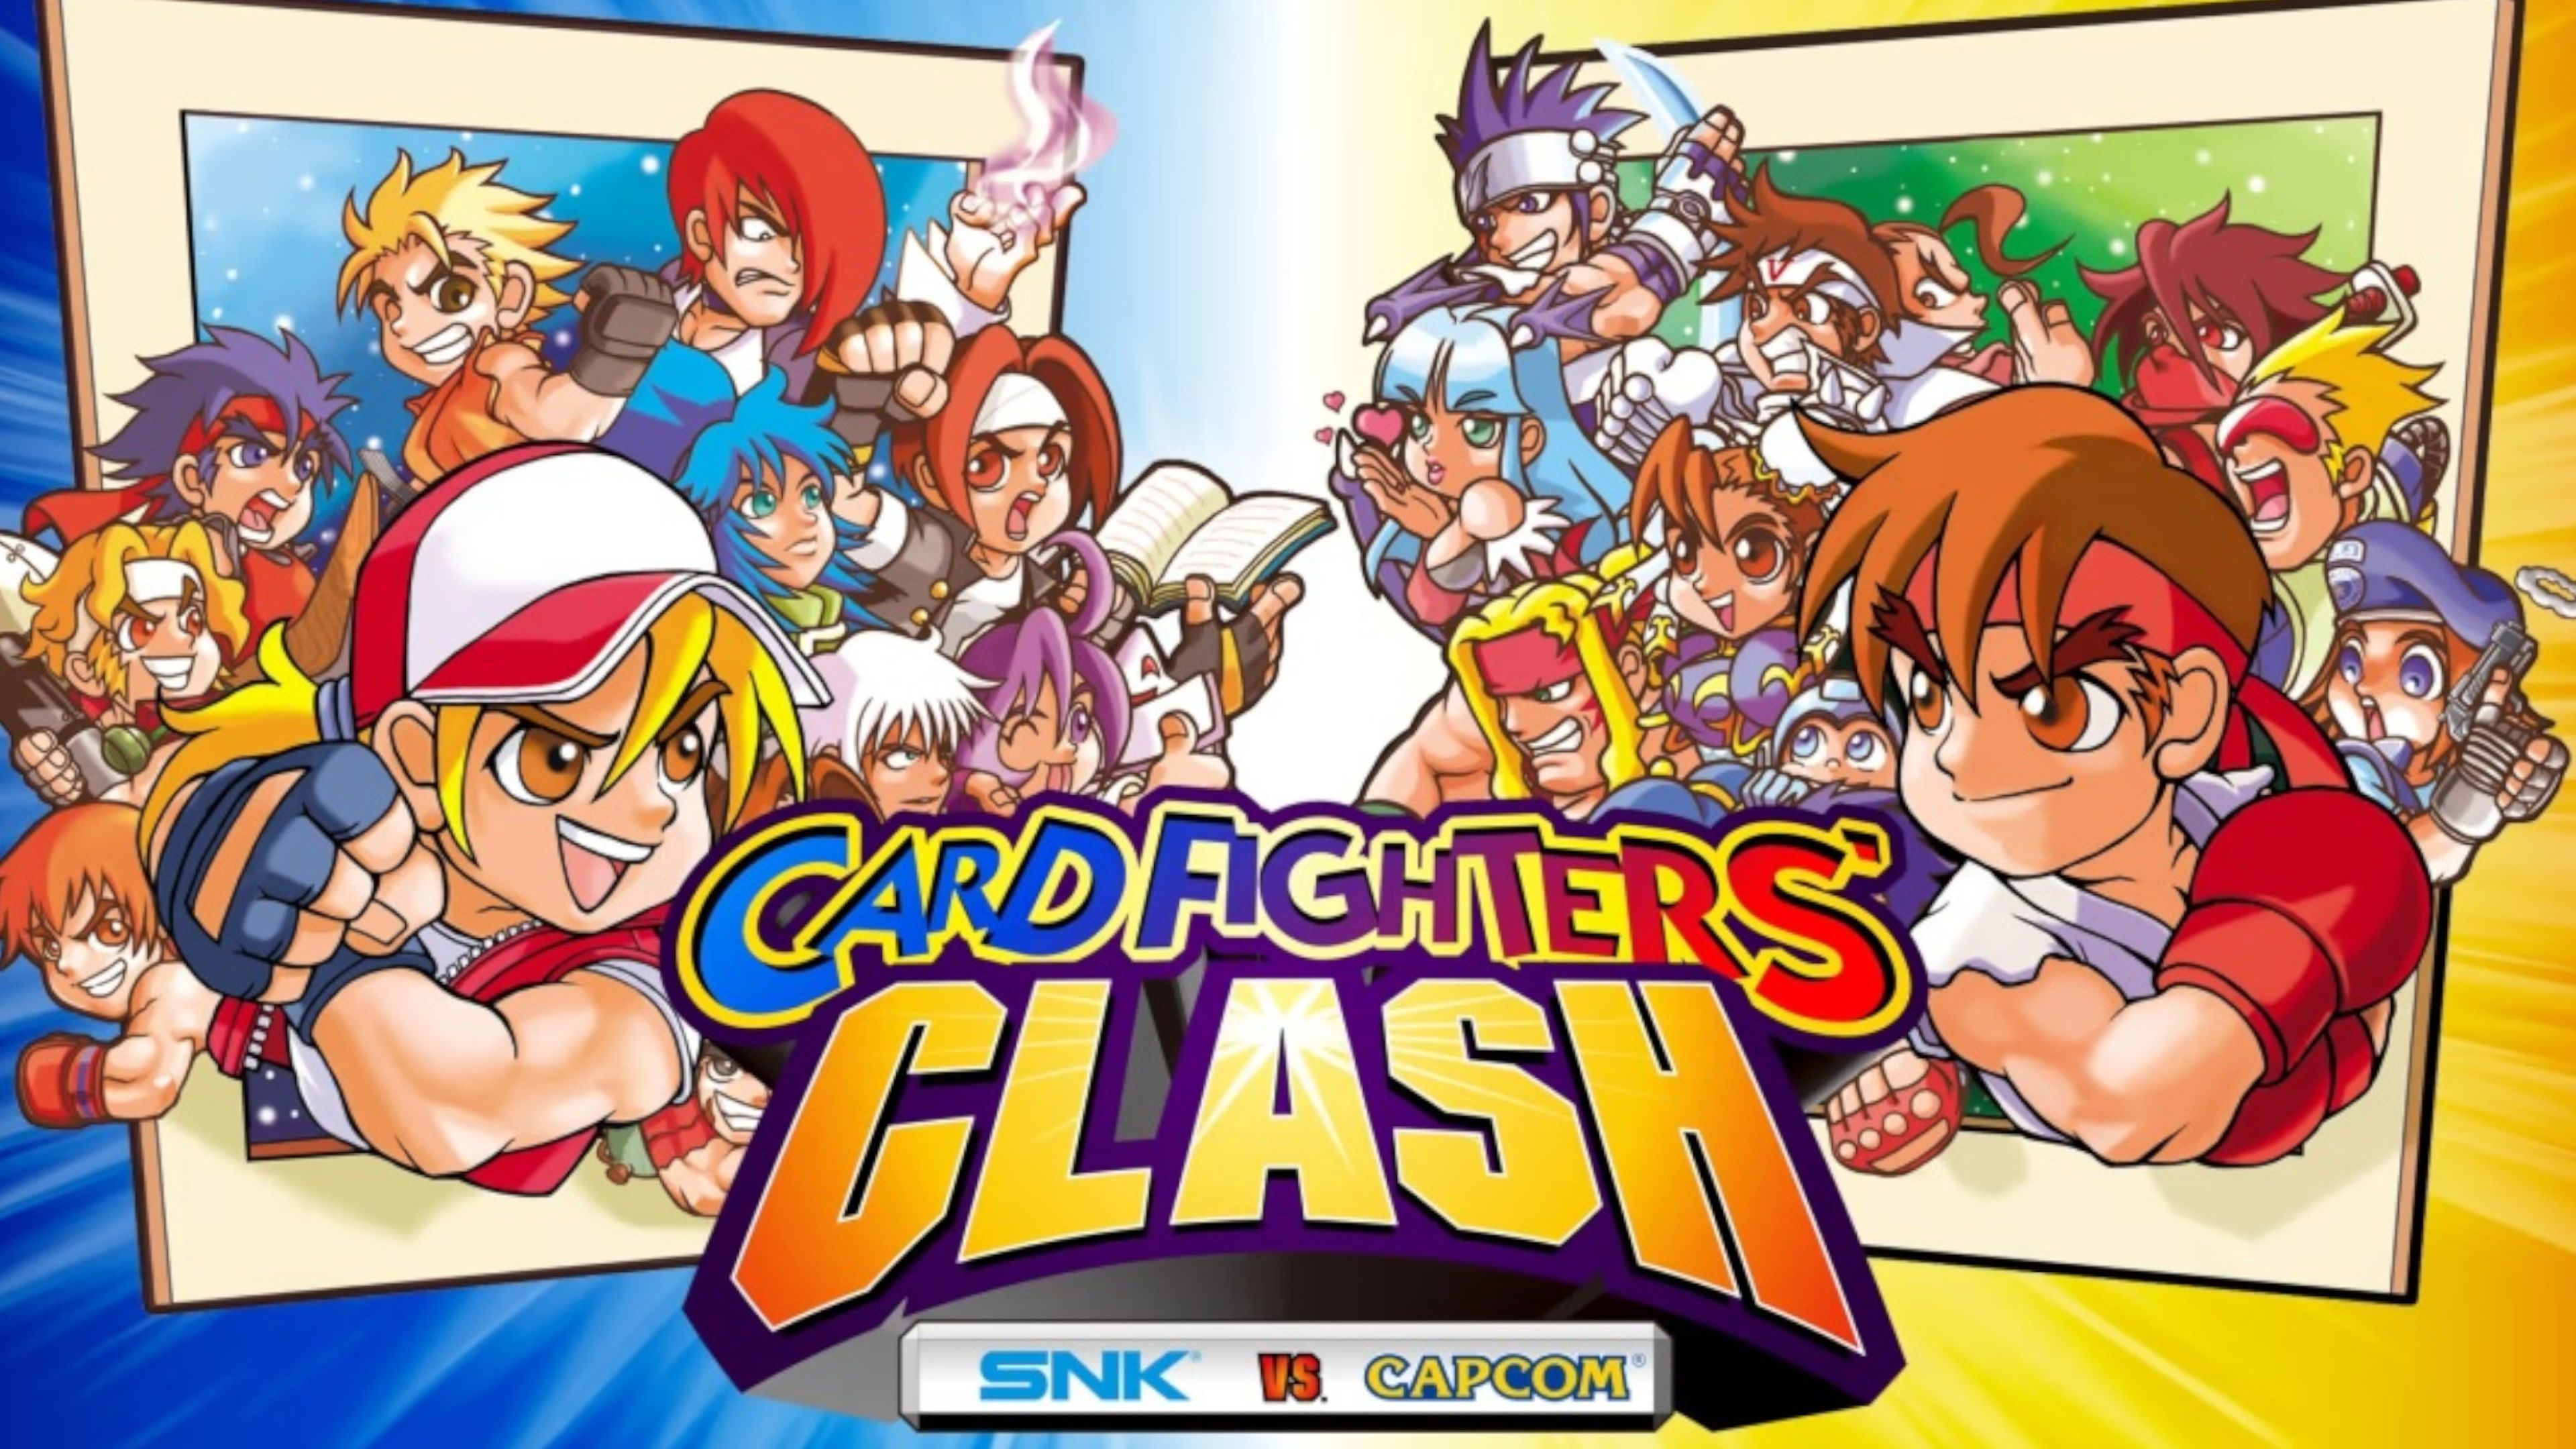 SNK vs Capcom Card Fighters